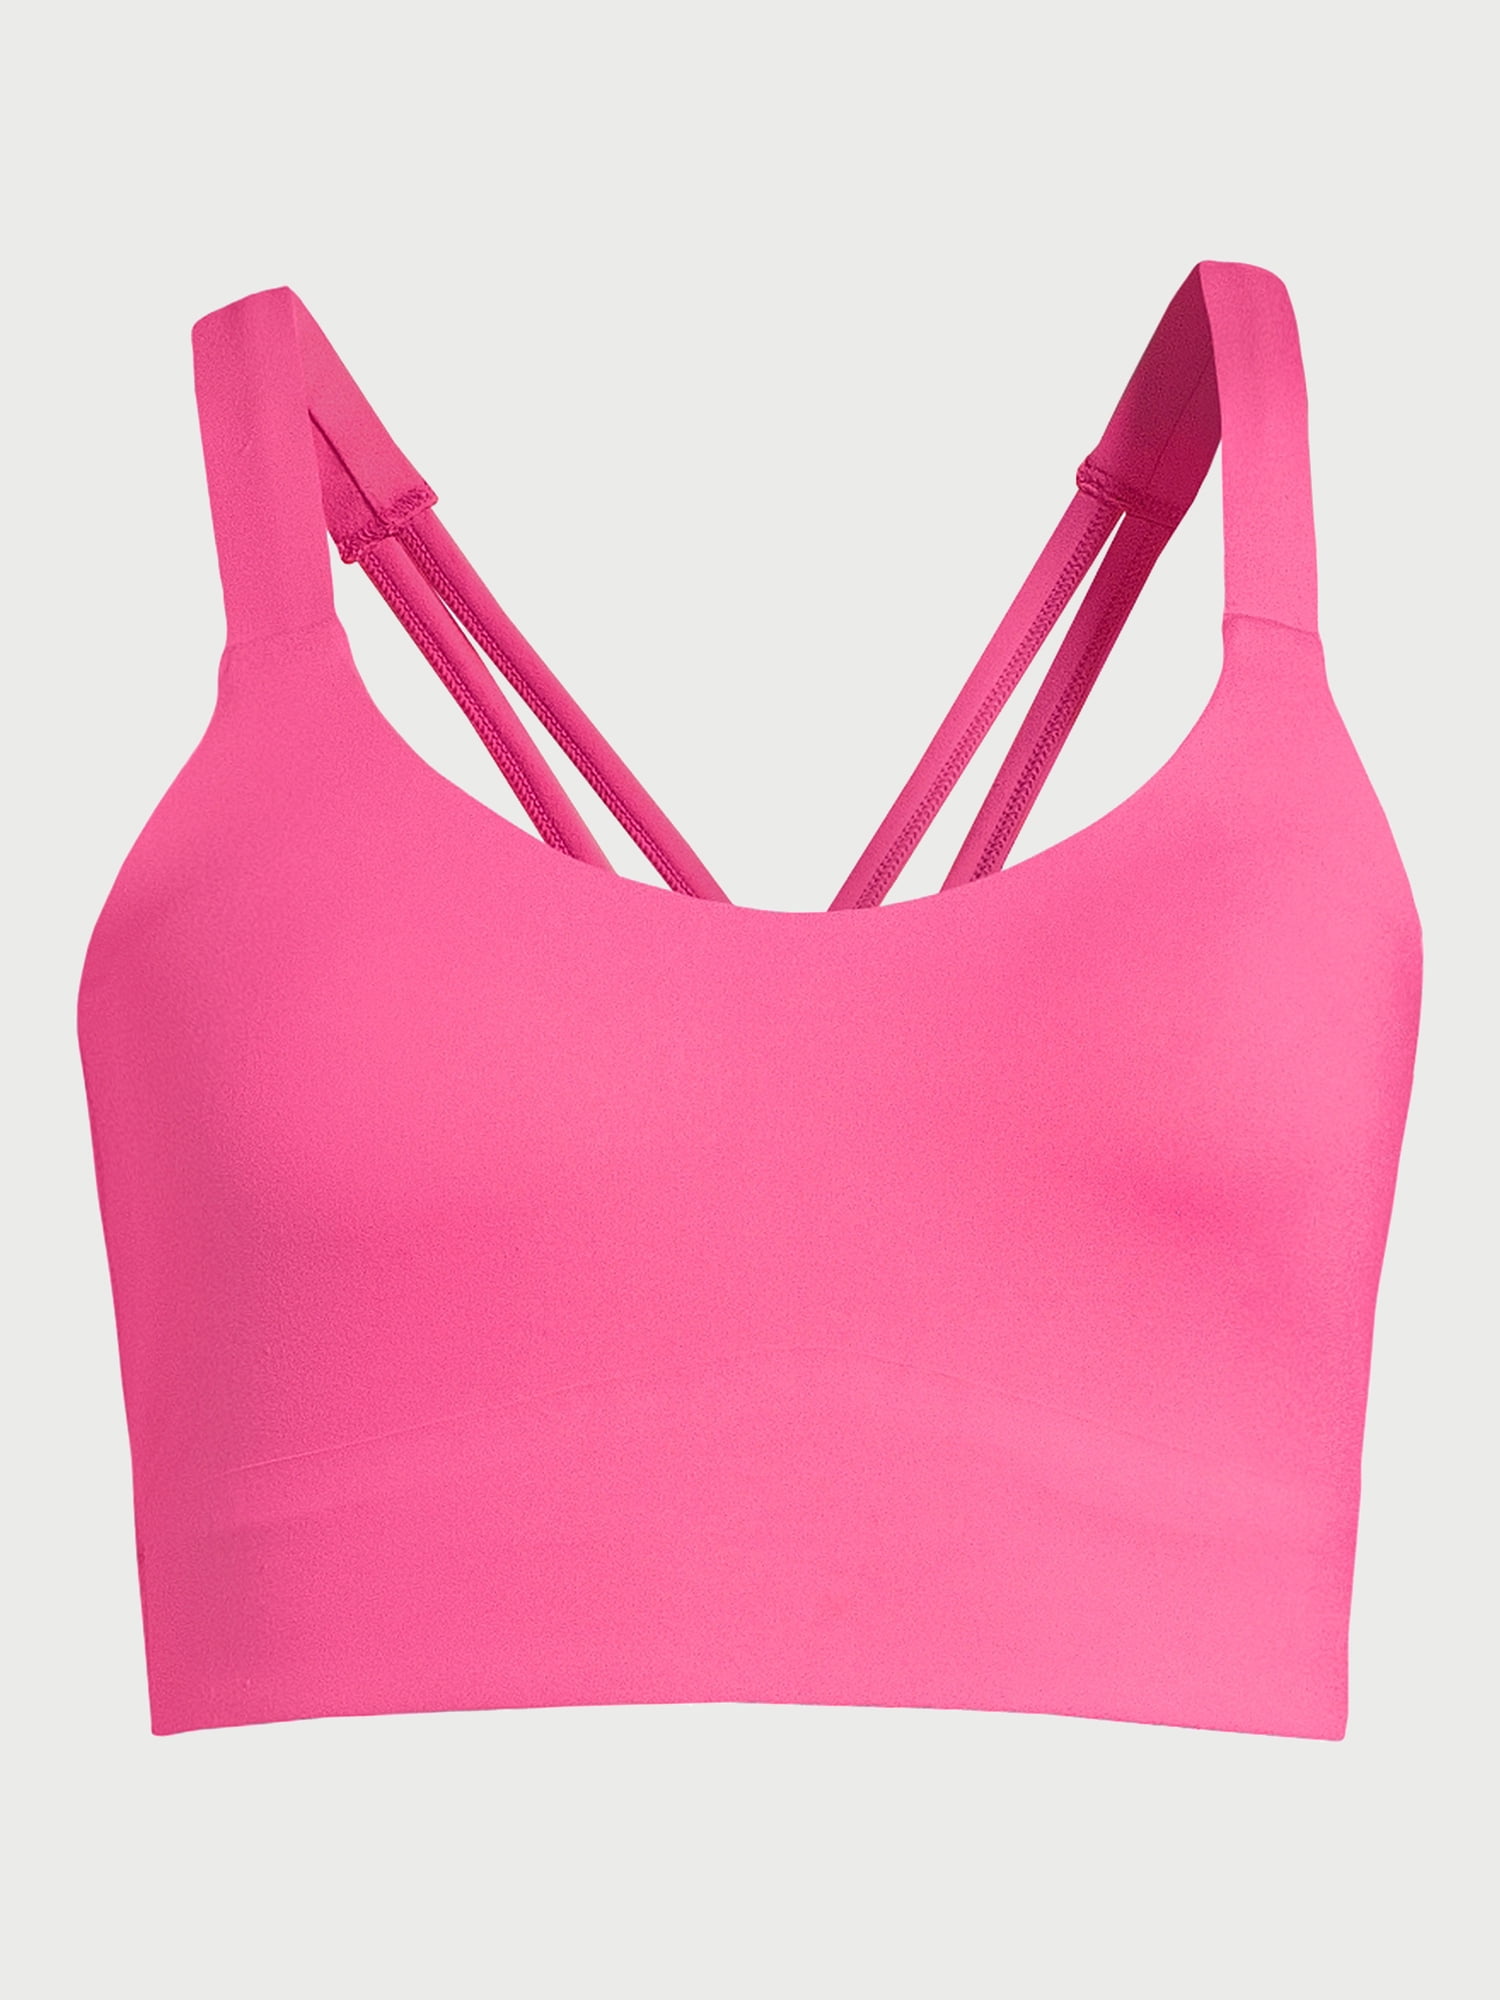 LVR Organic Sports Bra - Hot Pink